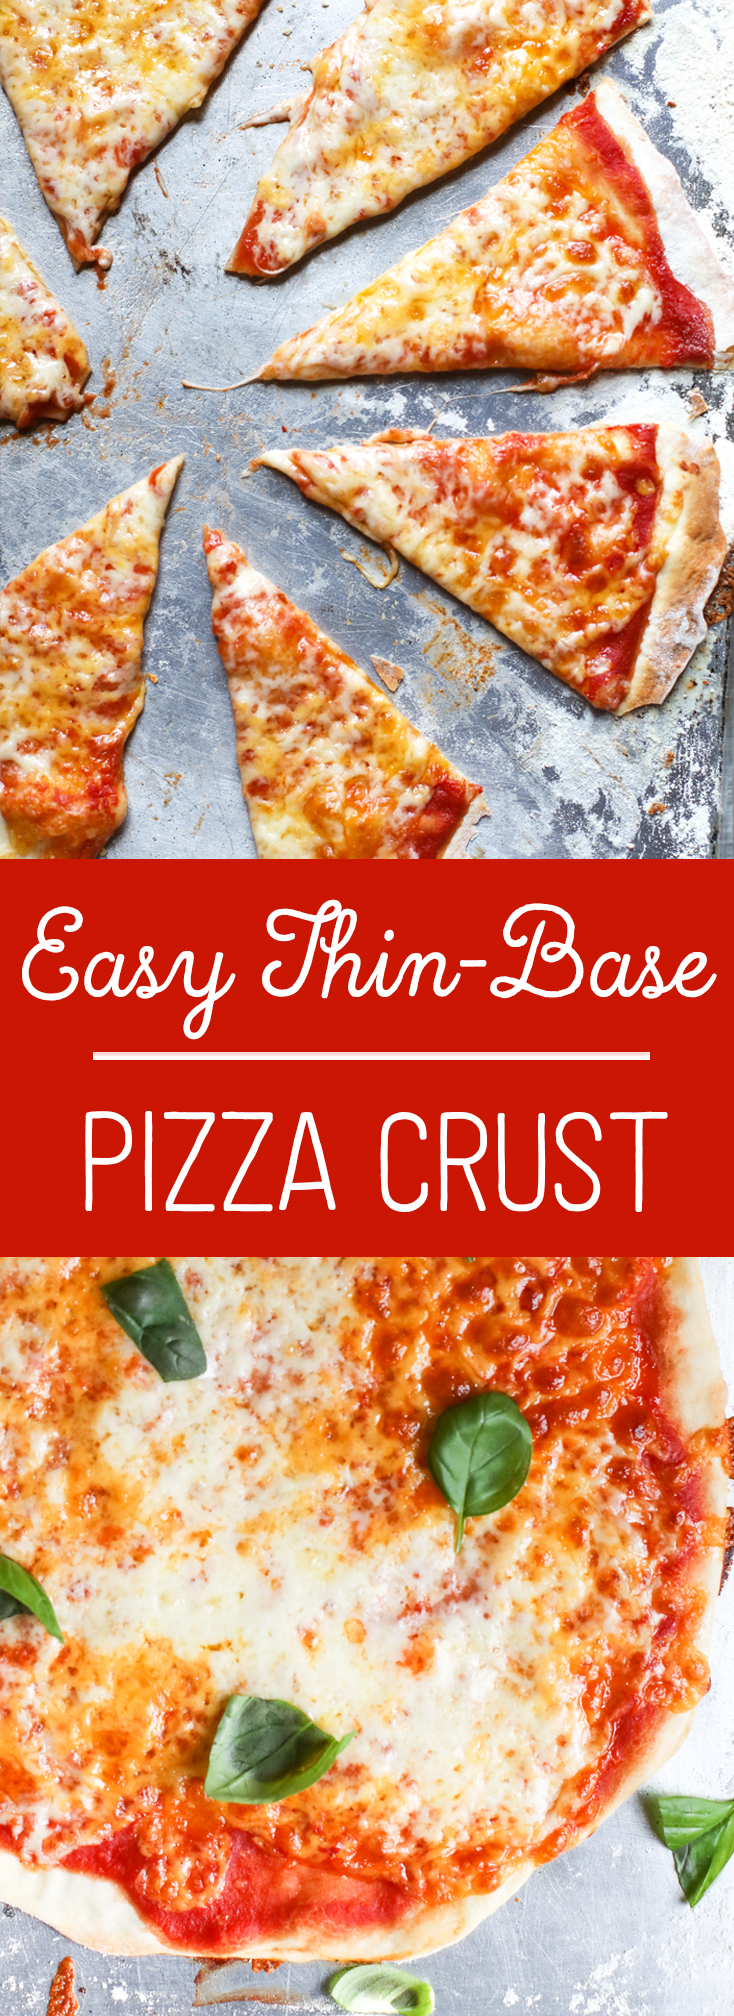 margherita pizza thin-crust recipe